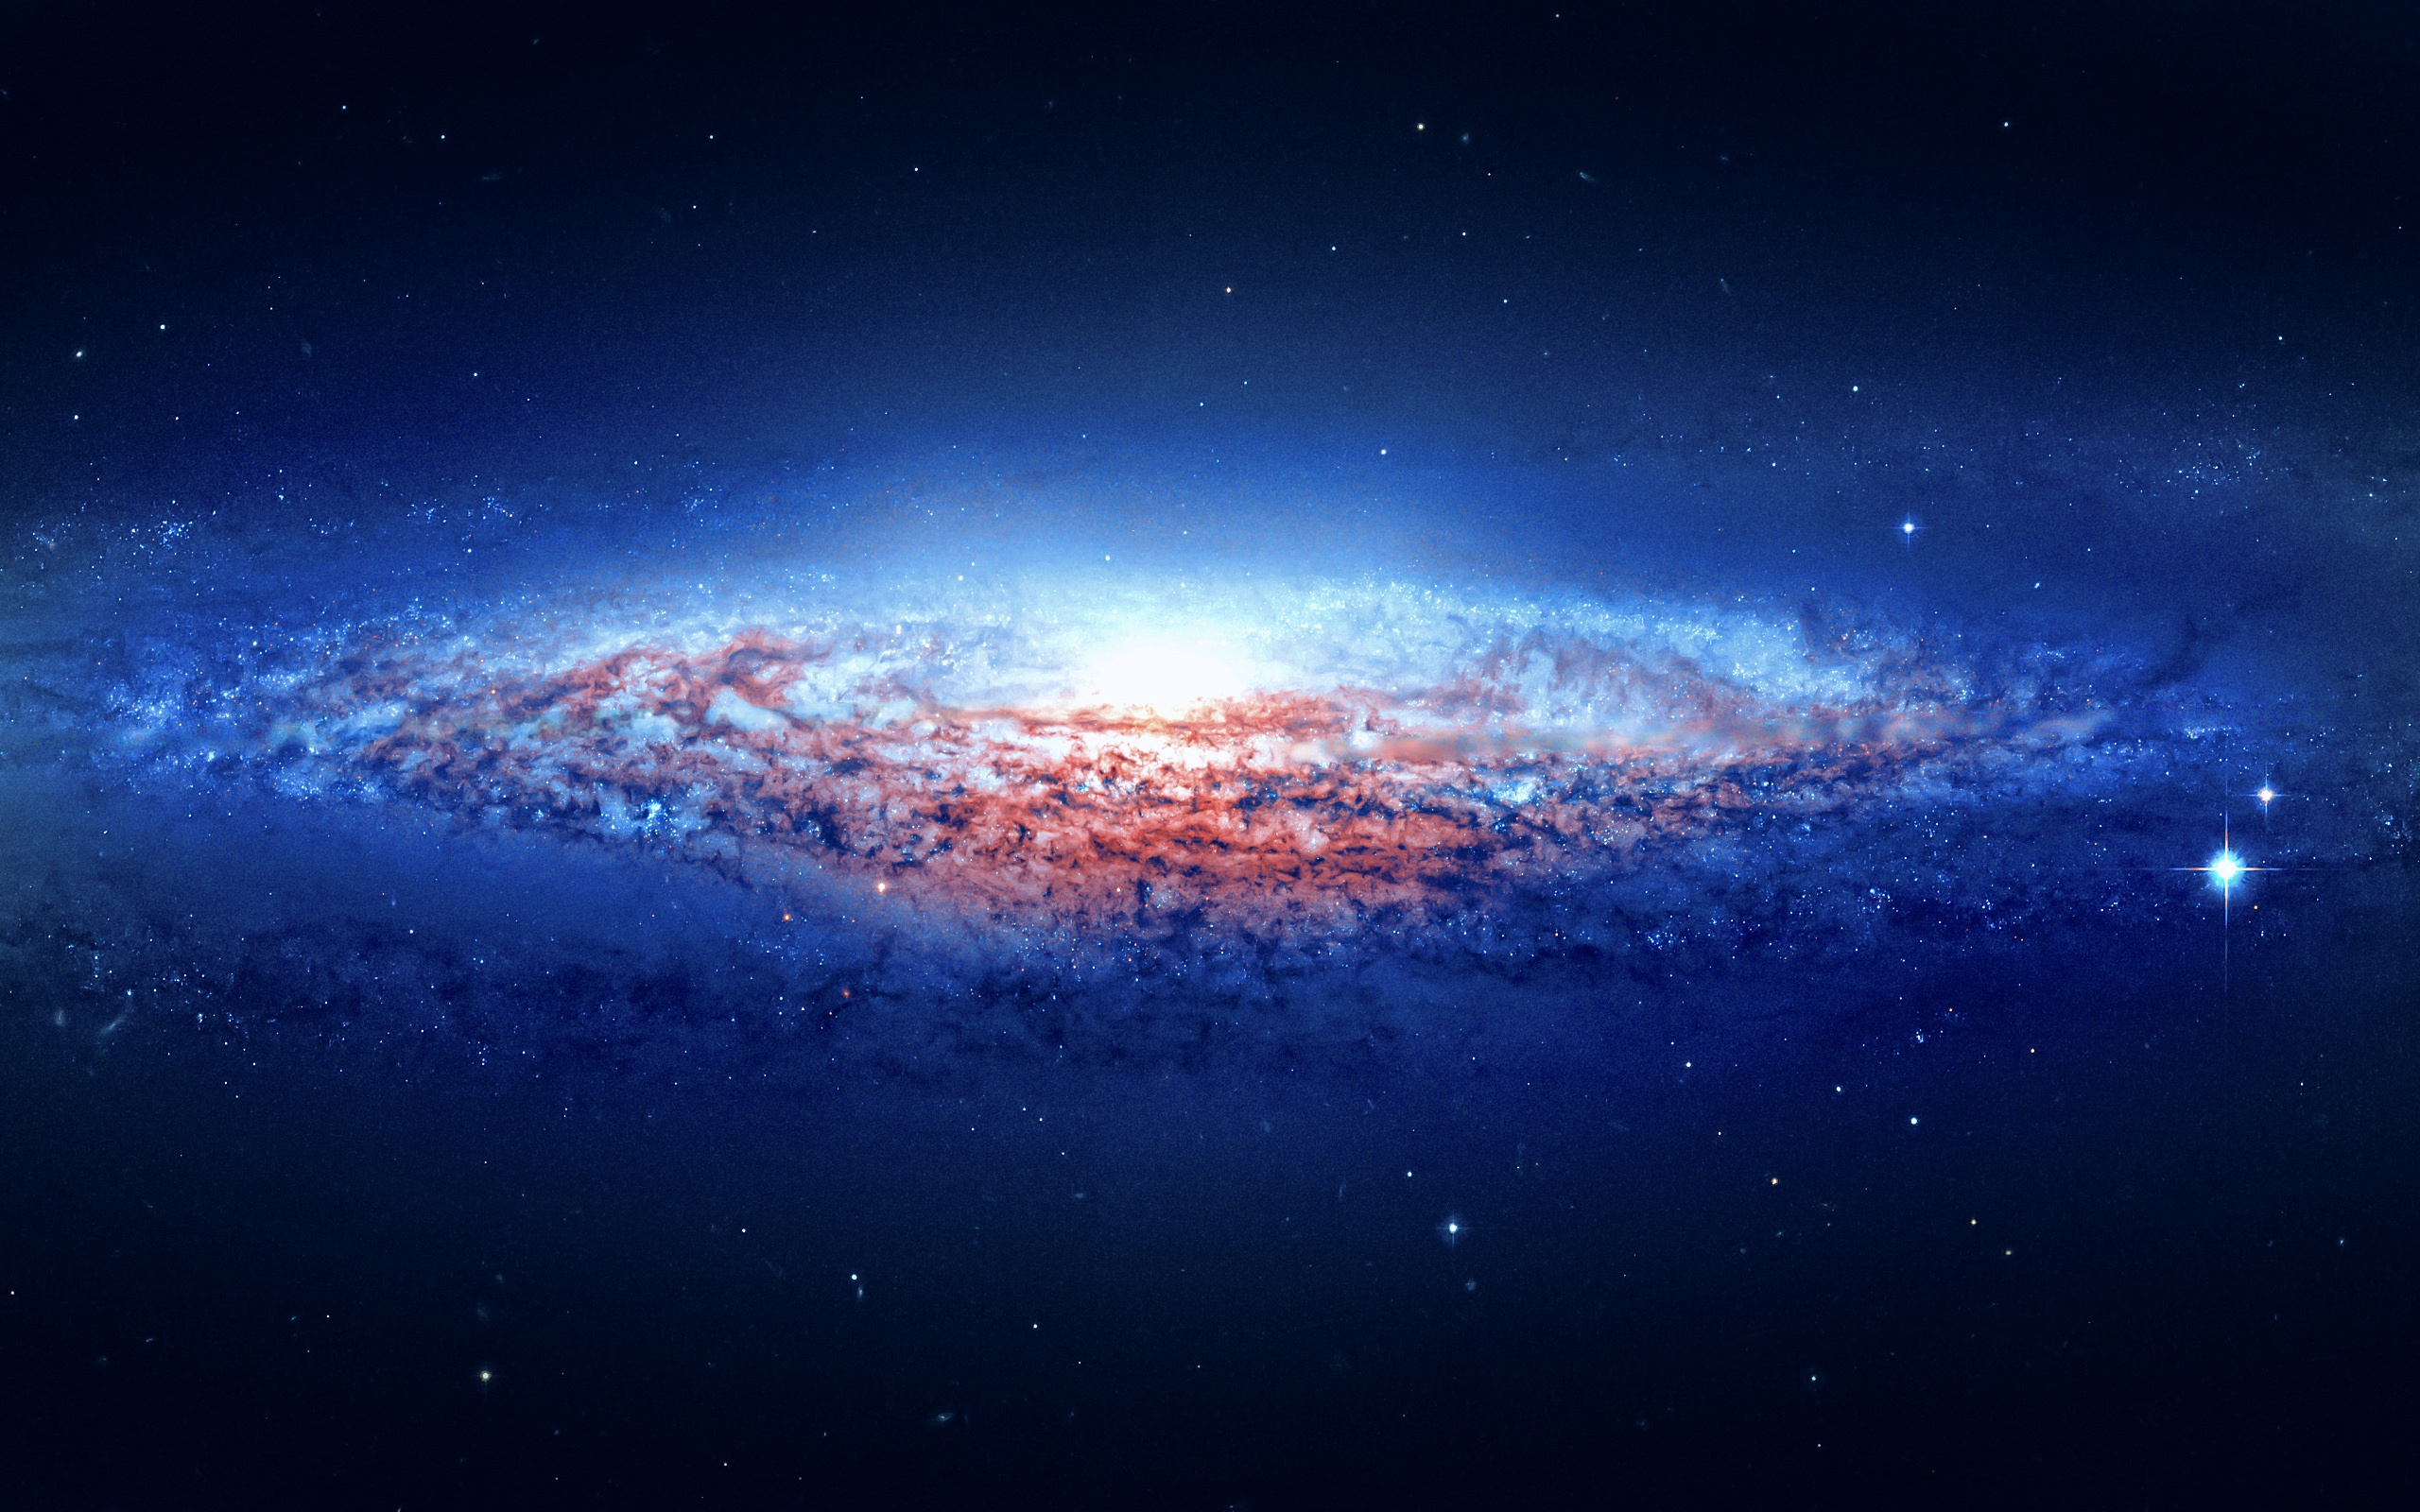 Big Bang: How Did the Universe Begin?